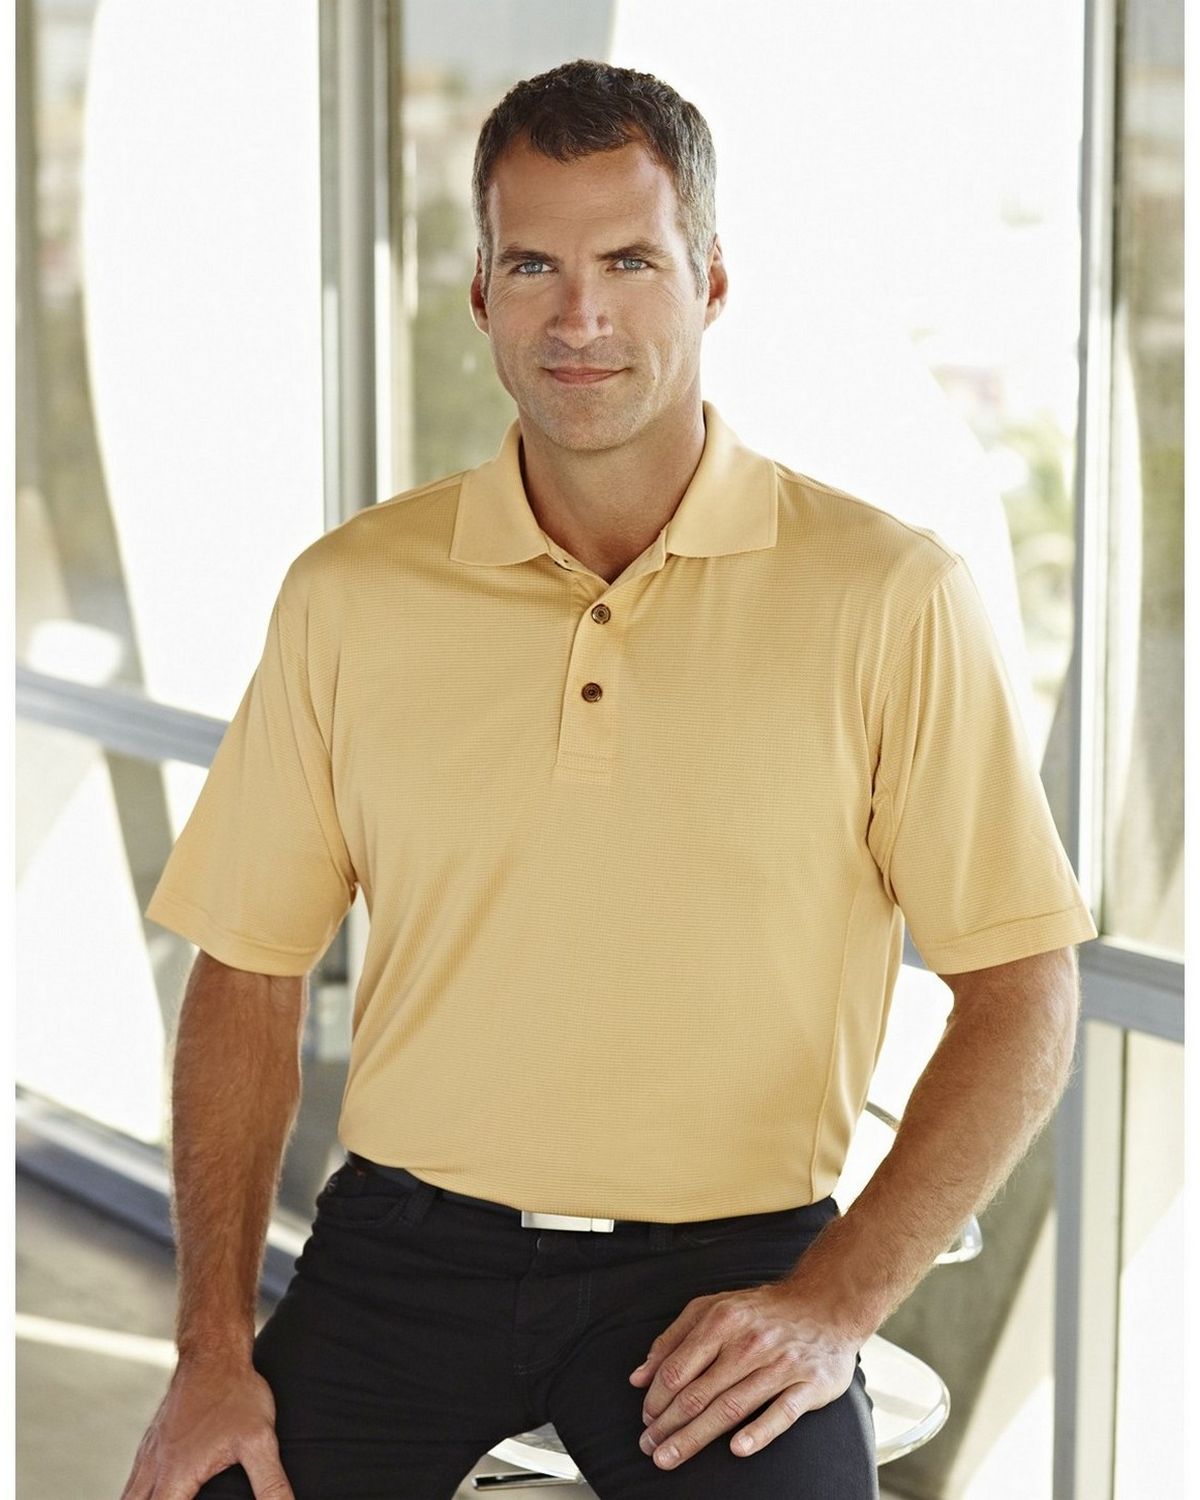 Tri-Mountain Gold 405 Poly UltraCool Knit Golf Shirt - ApparelnBags.com